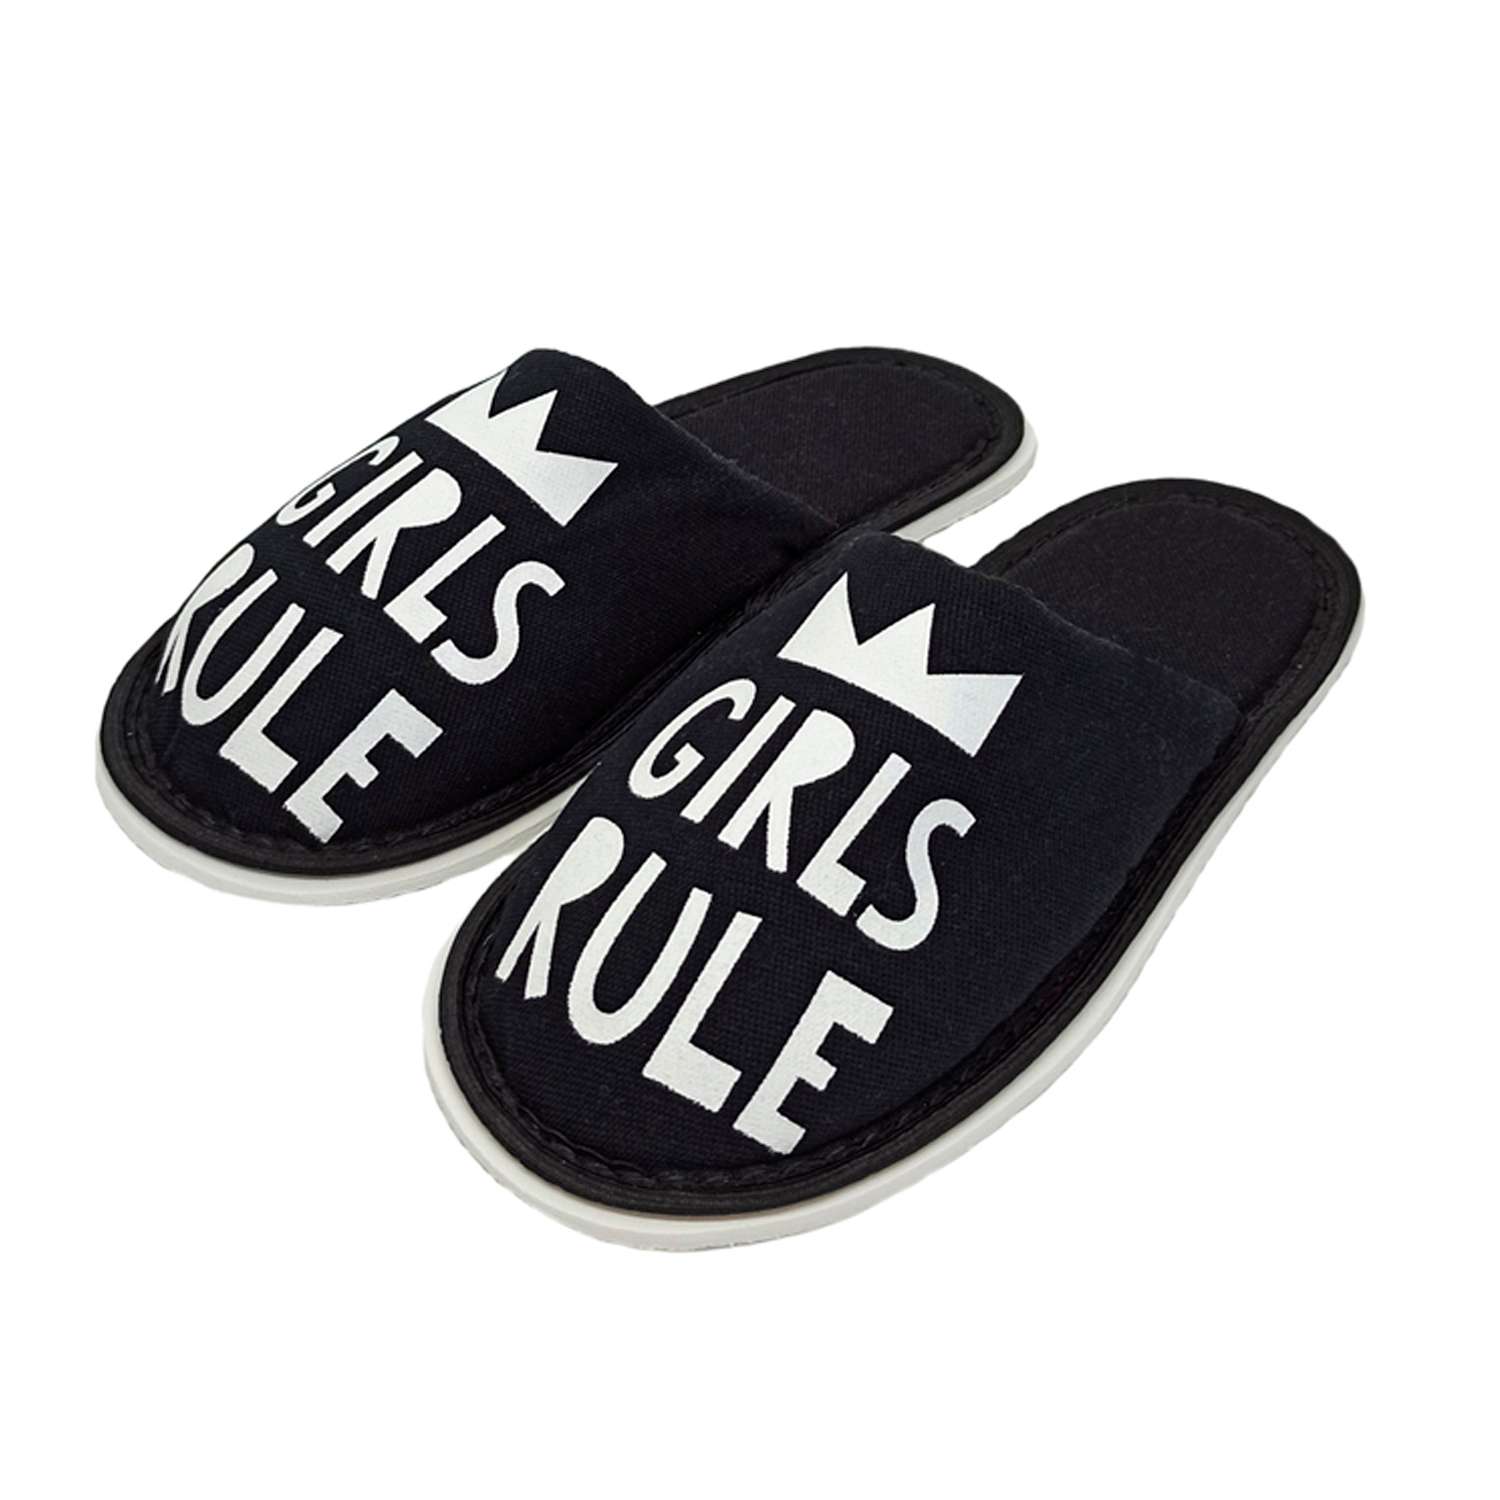 Тапочки IVShoes С-6ДМ(д-пч)-МР/девочки/черный - фото 1